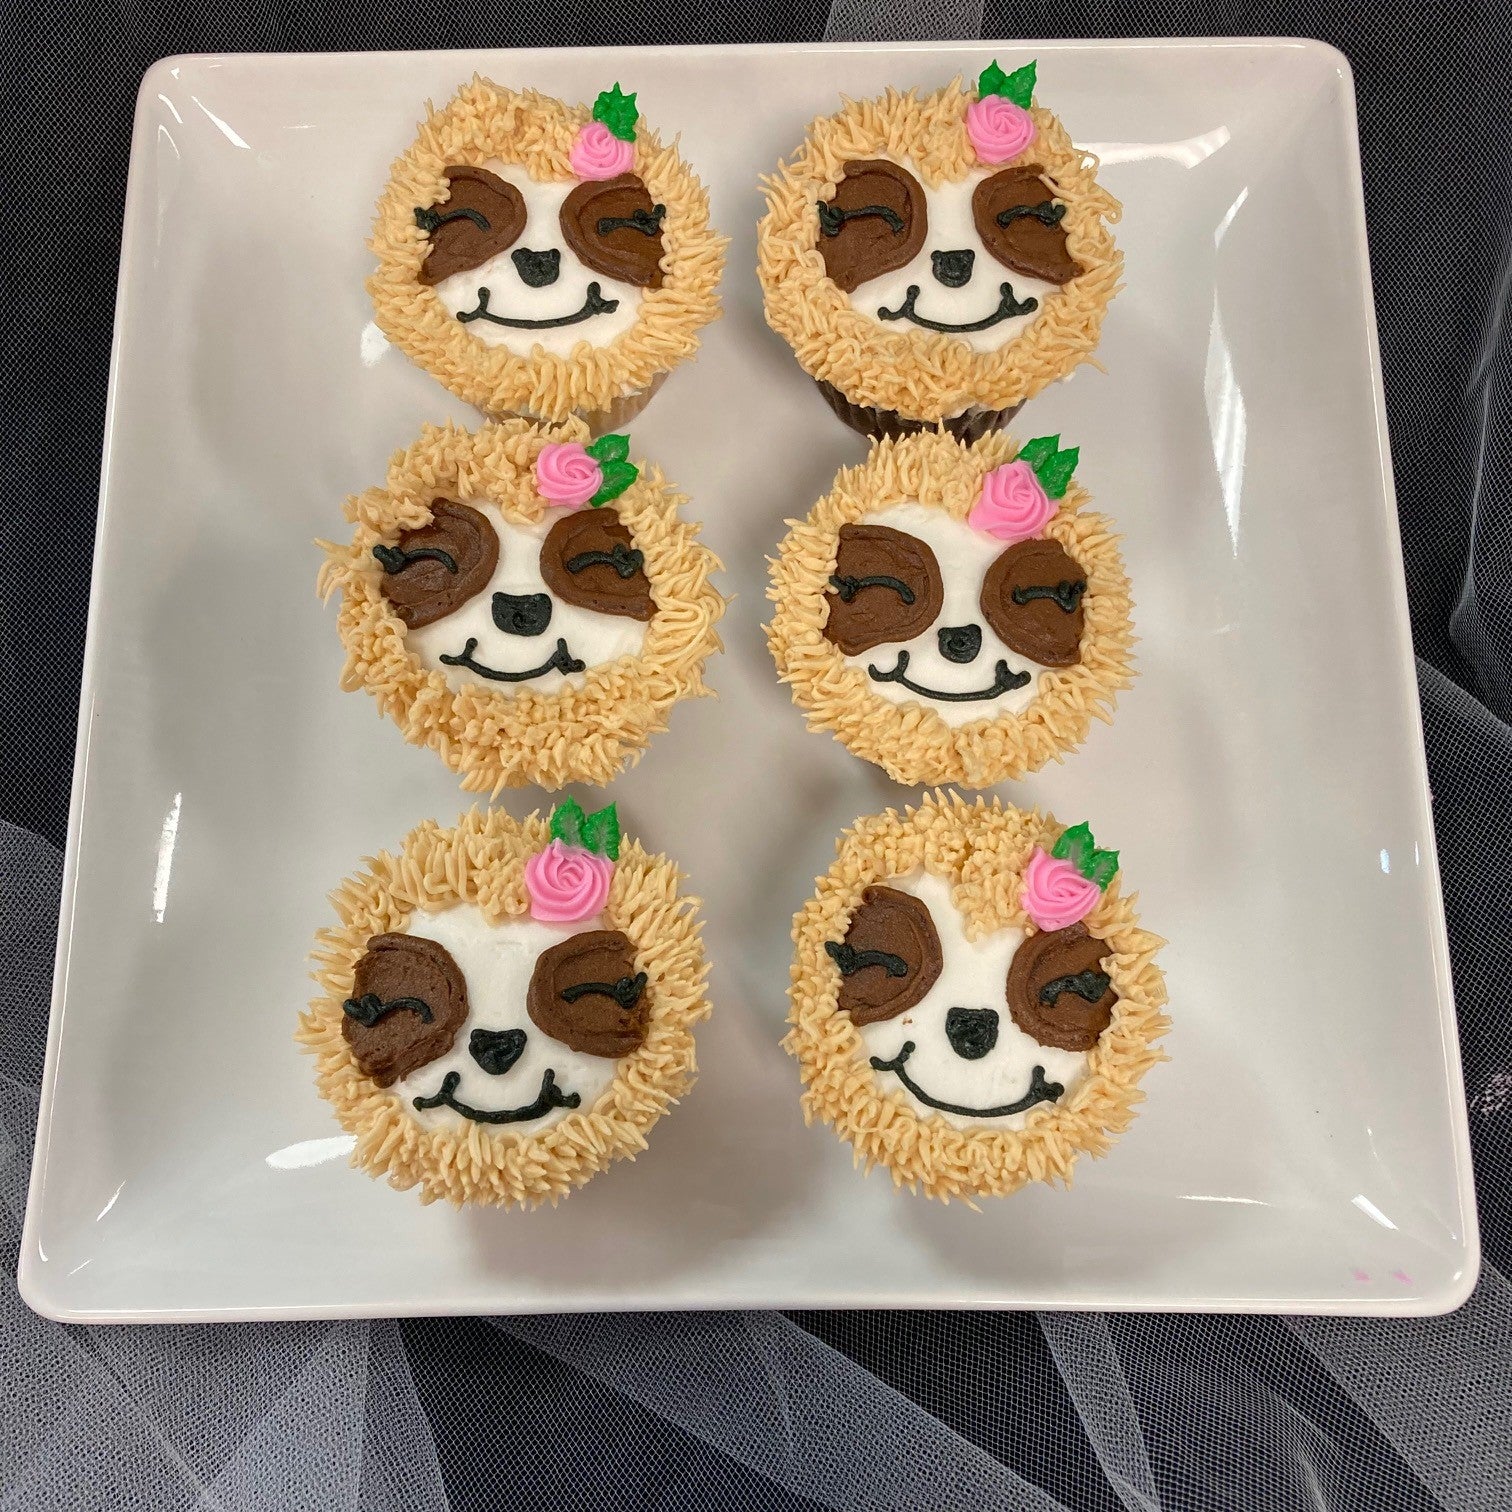 Red panda birthday cake | Panda cakes, Panda birthday cake, Panda birthday